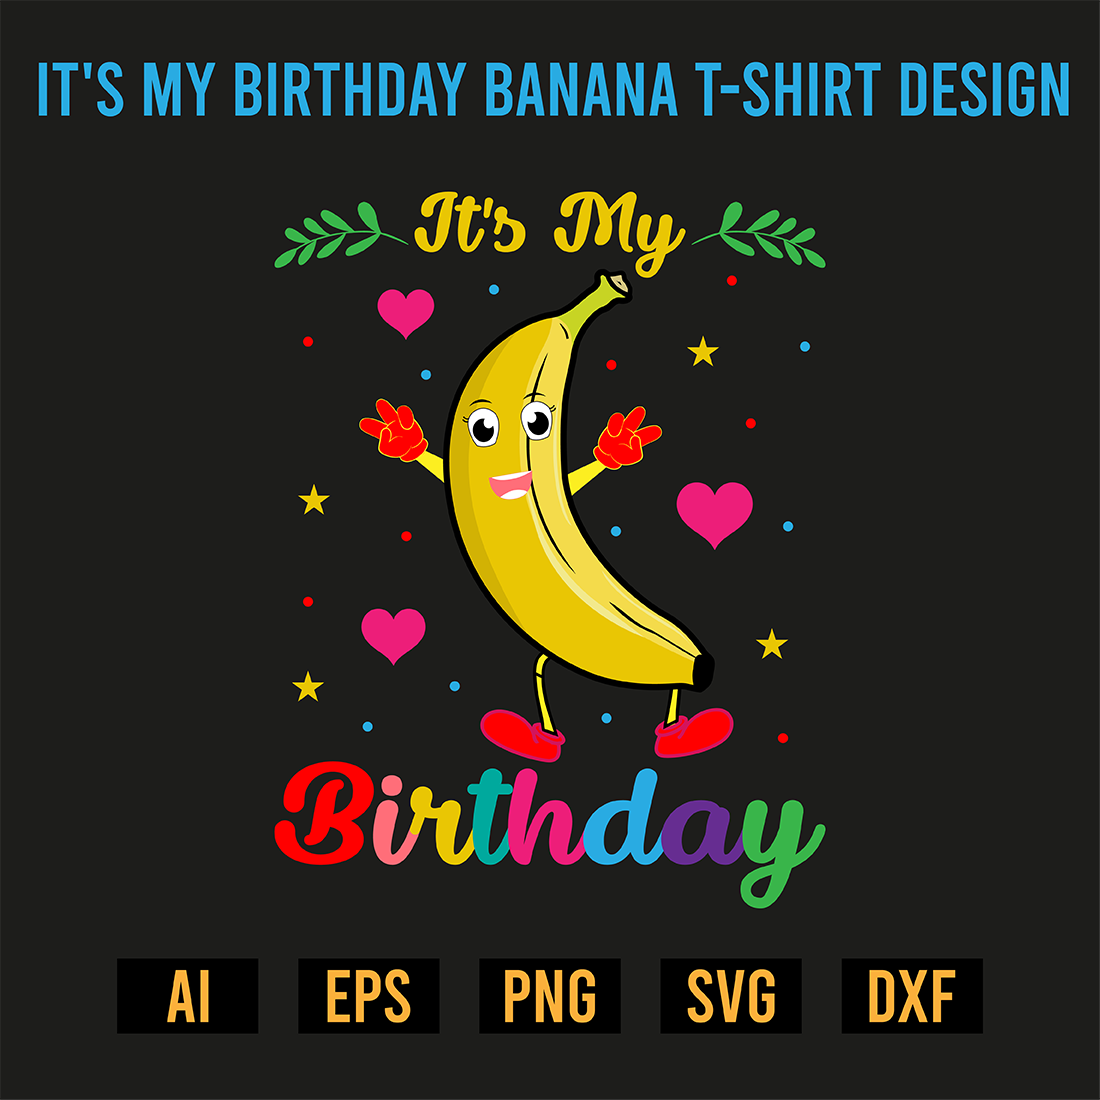 It's My Birthday Banana T-Shirt Design preview image.